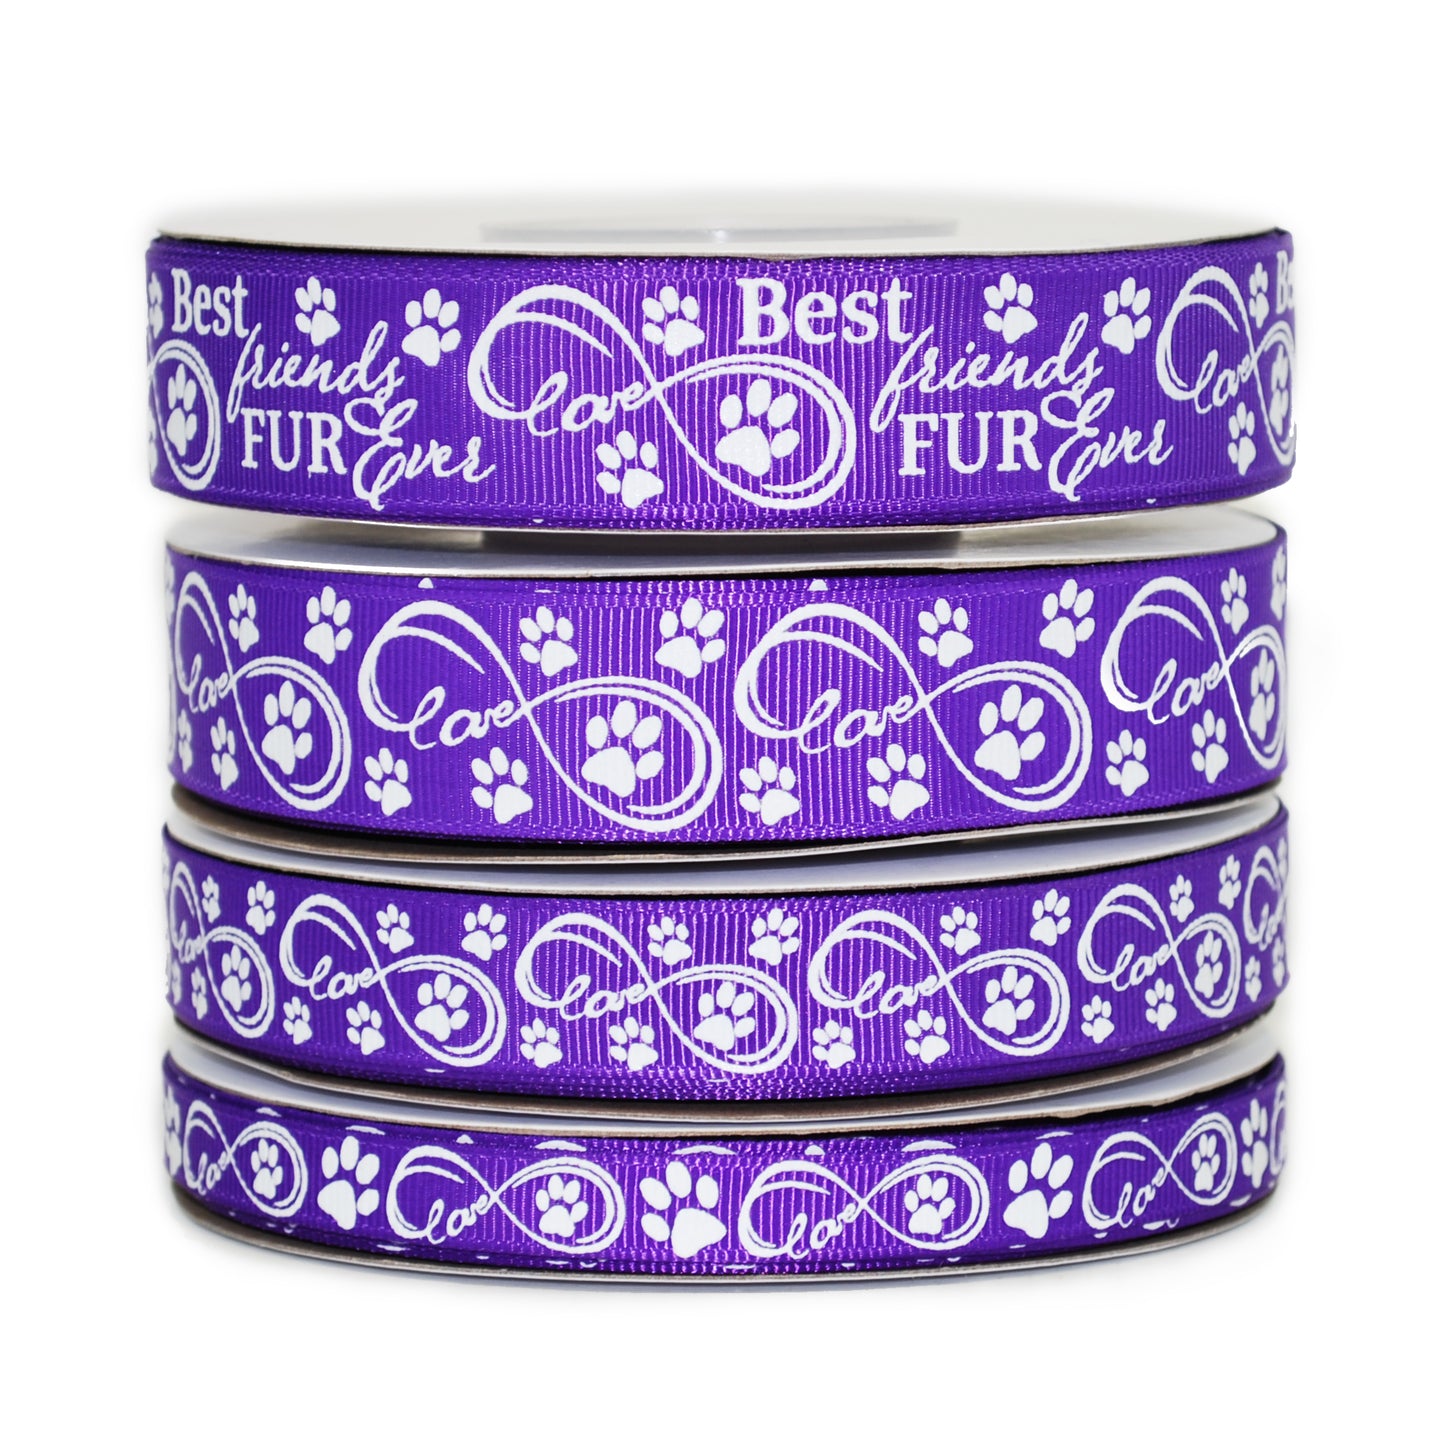 Best Friends Fur Ever Grosgrain Ribbon Collection On Purple